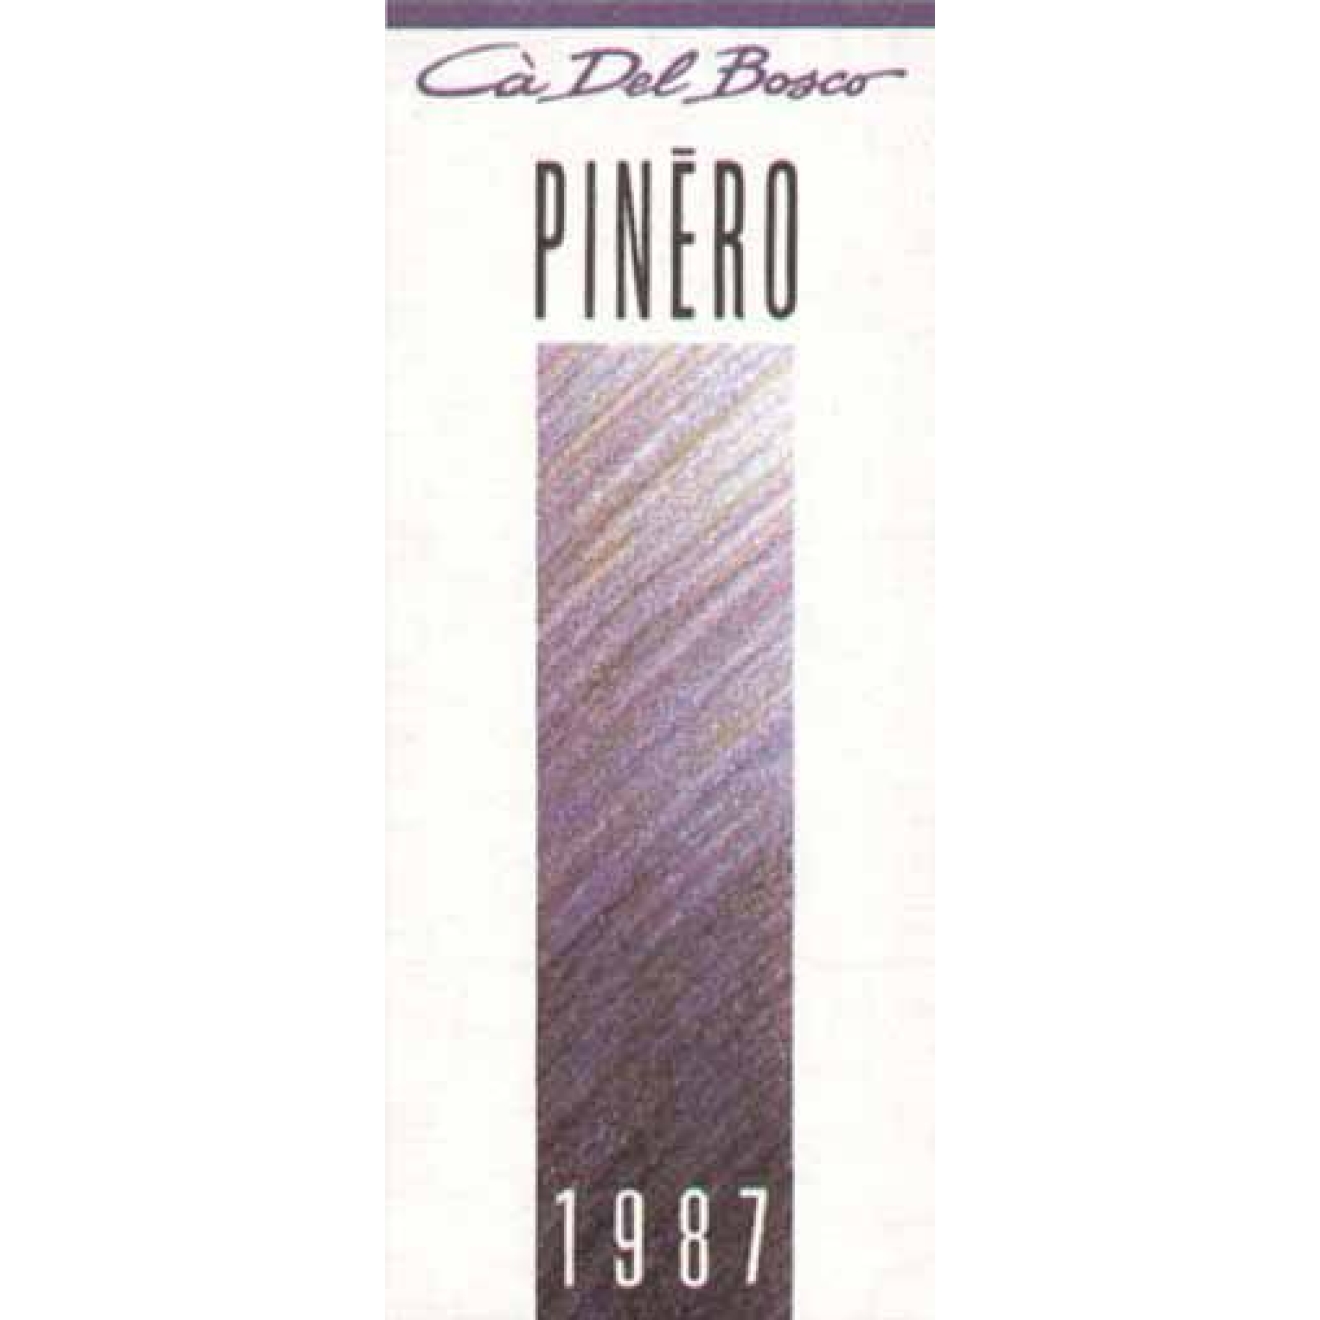 1987 Pinero (1,5lt.) - Ca del Bosco